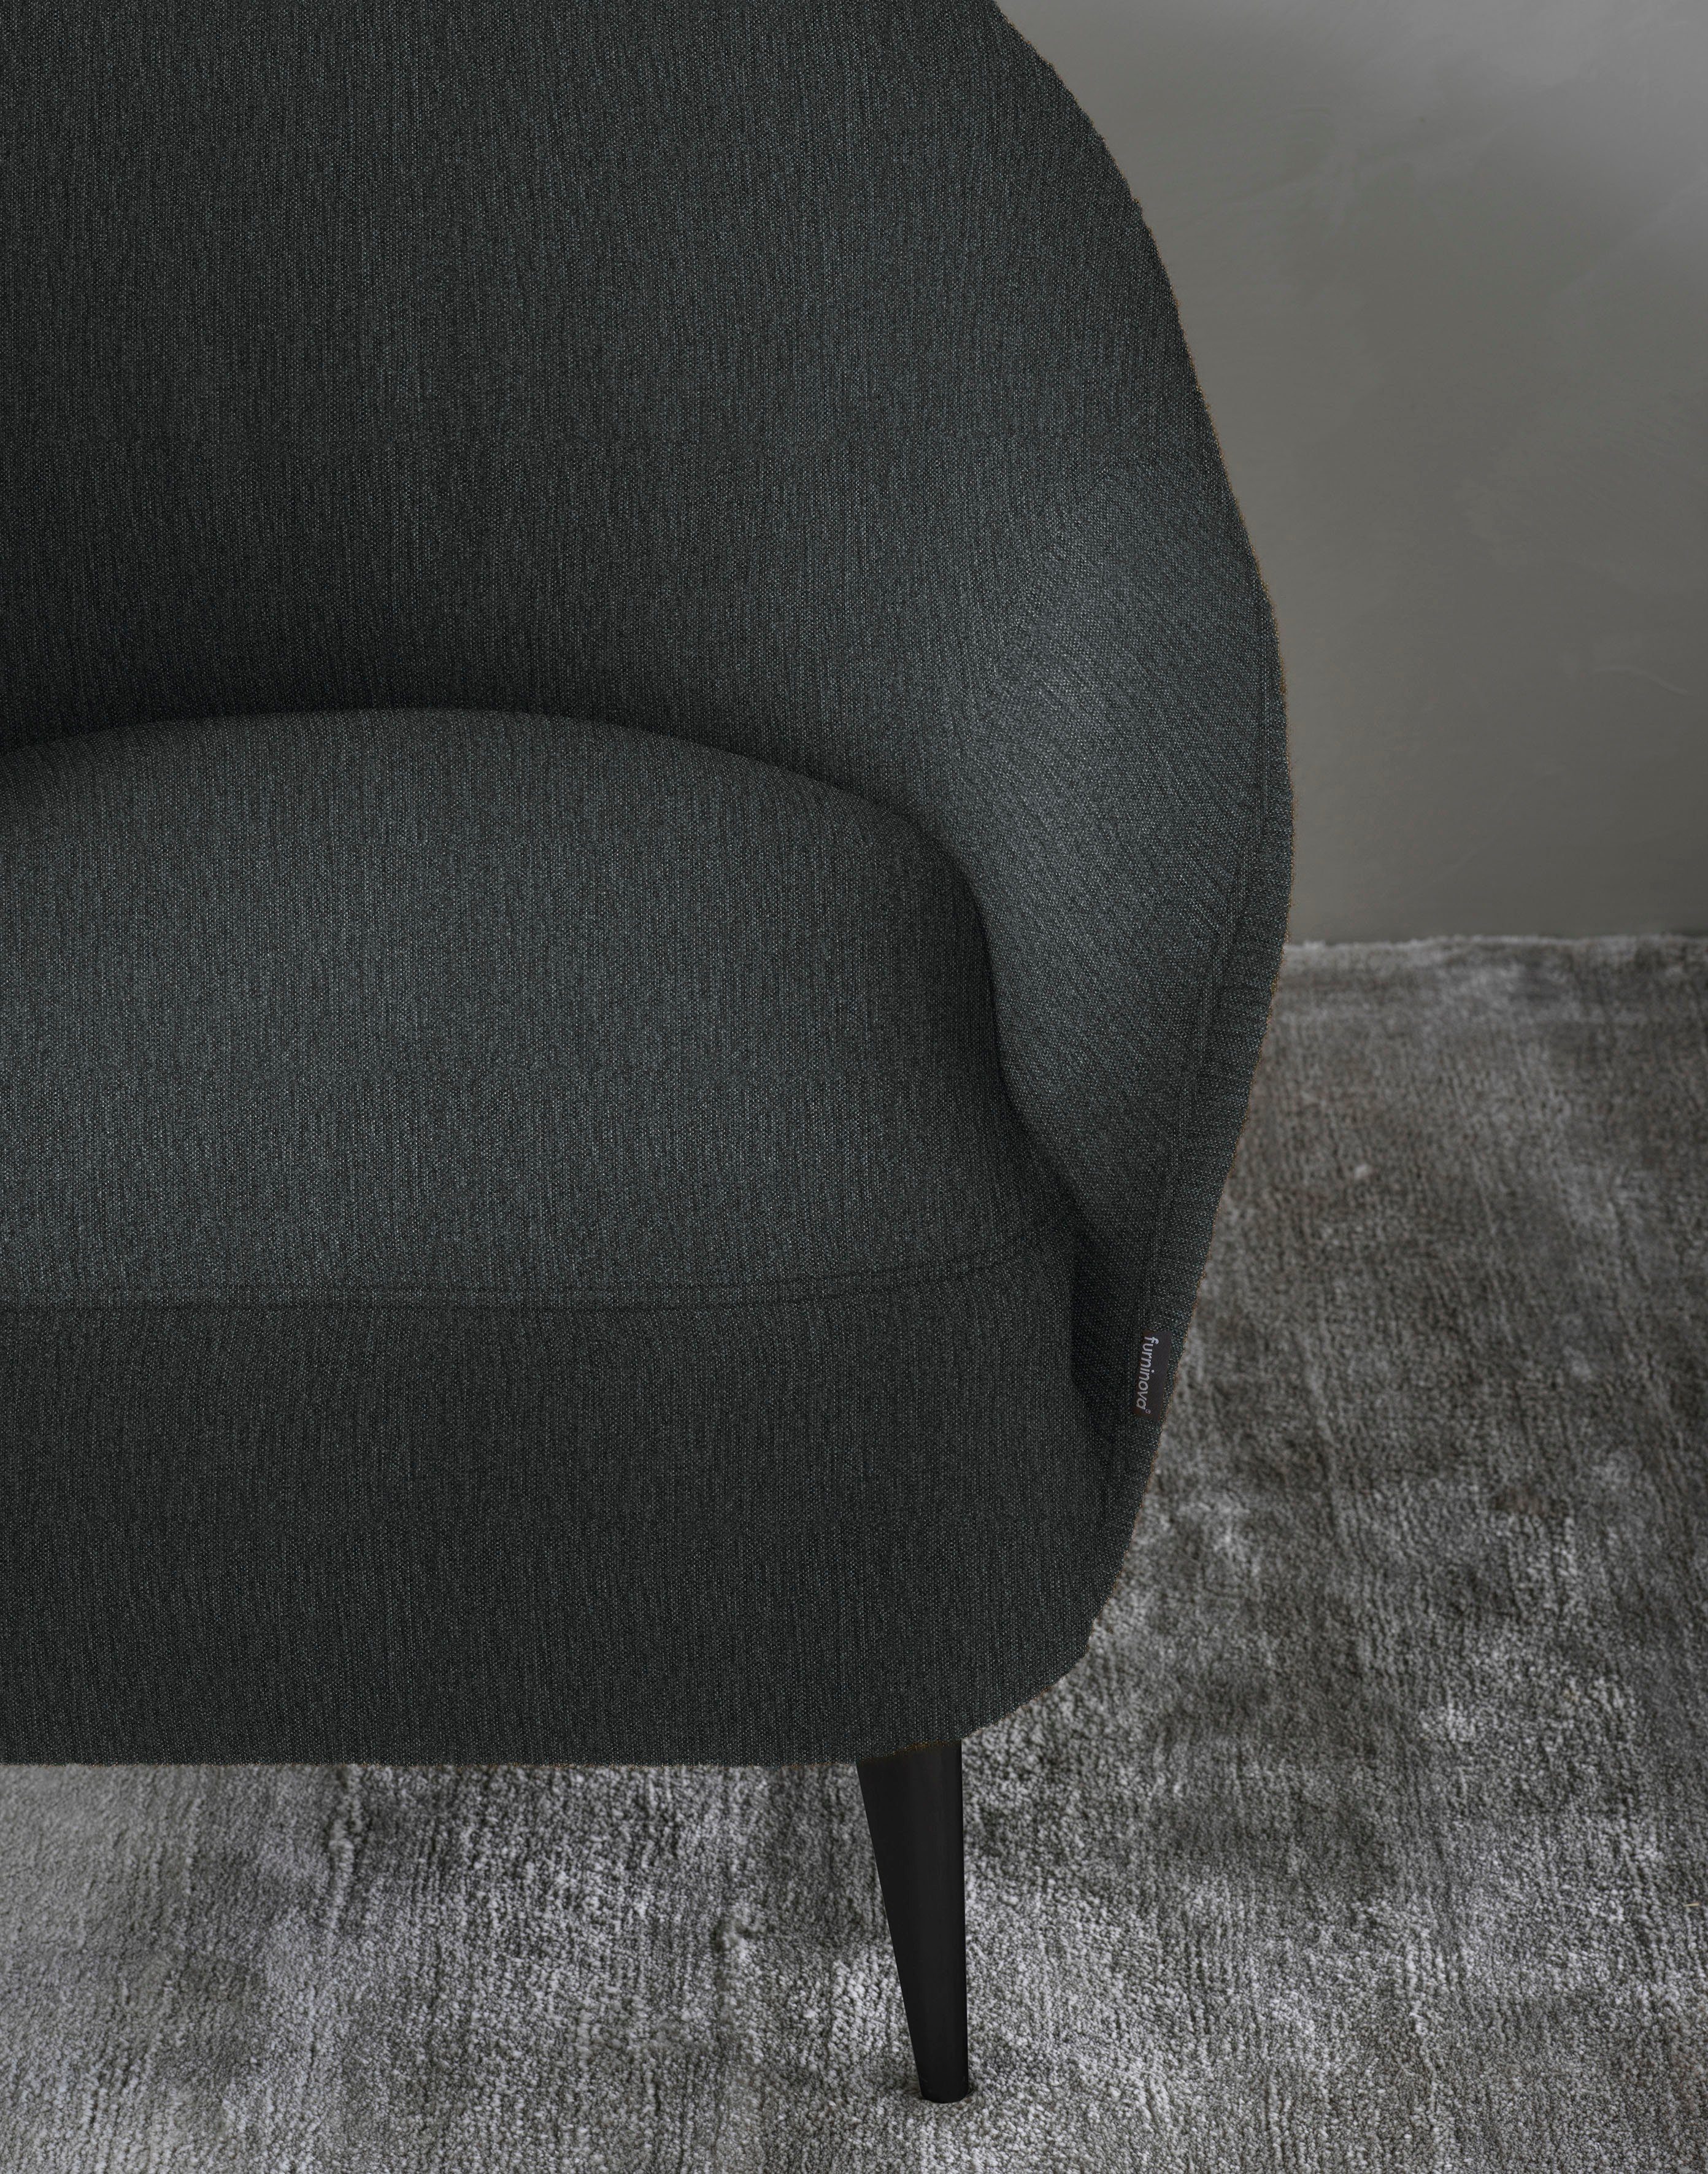 furninova Loungesessel Paloma, wahlweise mit im Design Chromfuß, skandinavischen grey